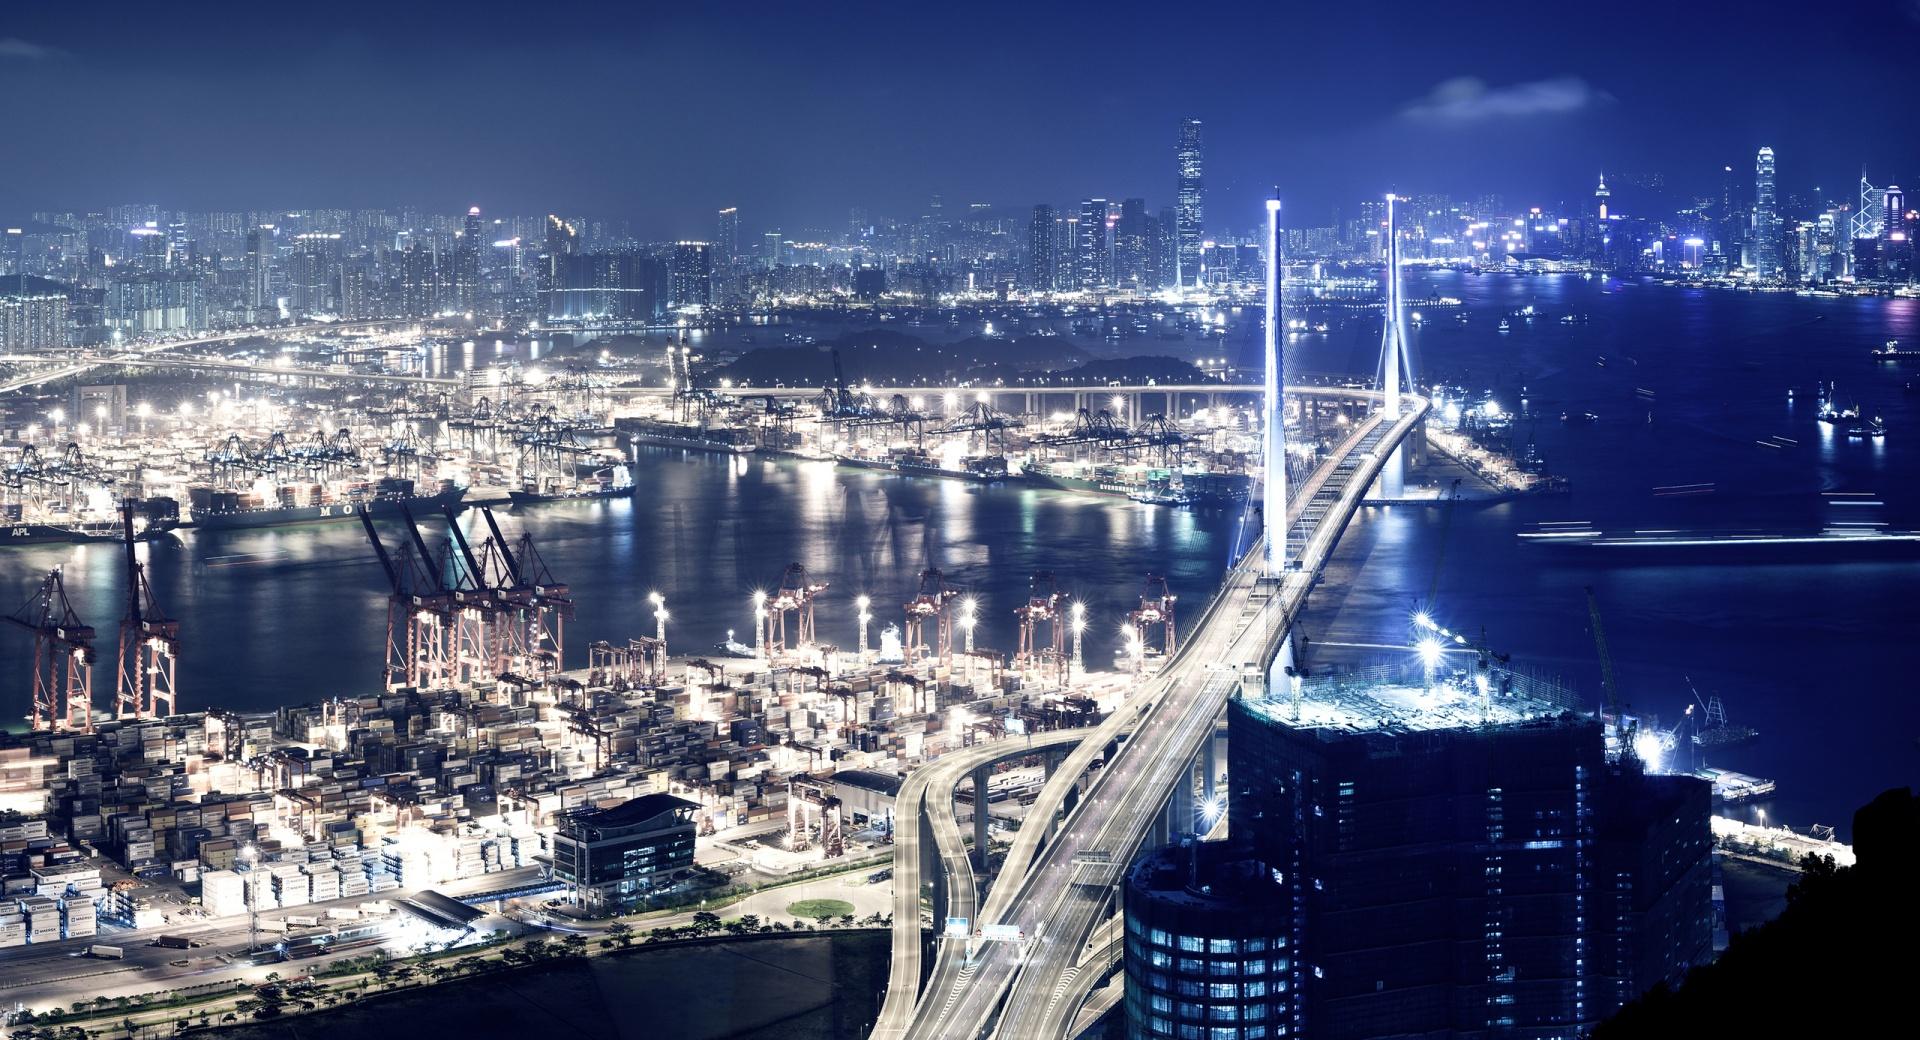 Panoramic View Of Hong Kong At Night at 640 x 1136 iPhone 5 size wallpapers HD quality